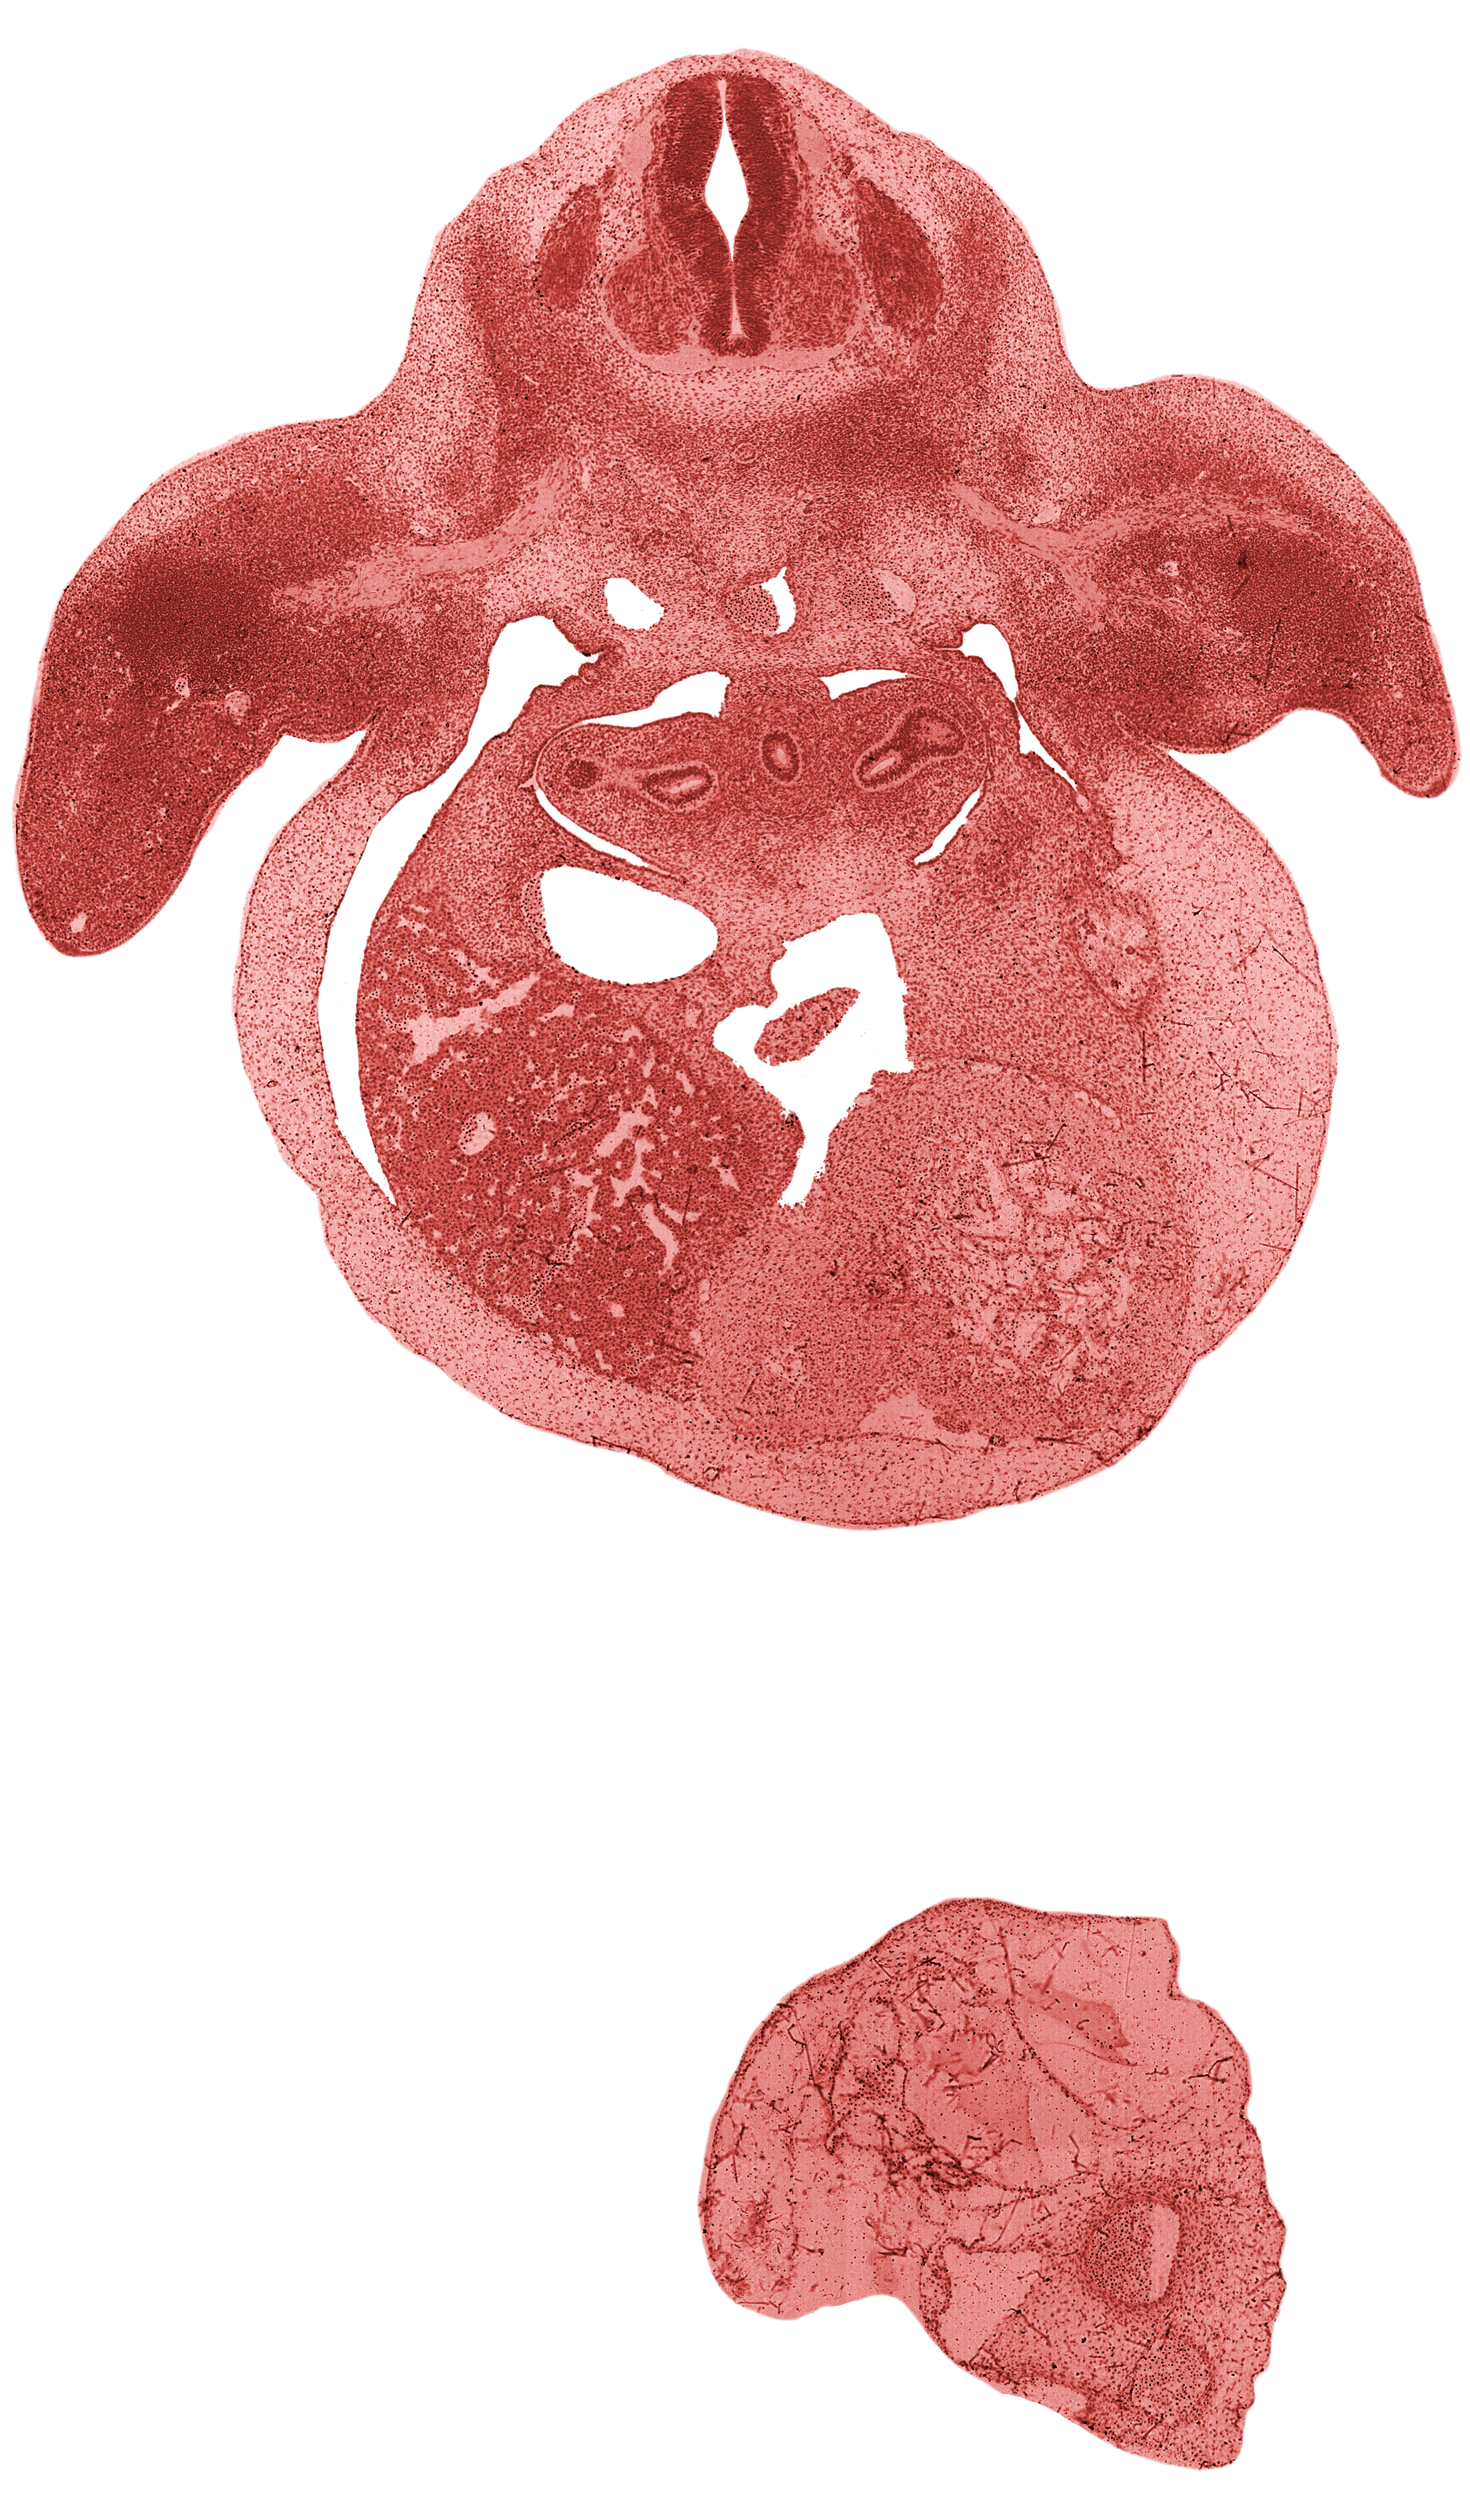 C-7 spinal ganglion, brachial artery, dorsal intersegmental artery, dorsal meso-esophagus, edge of left horn of sinus venosus, edge of middle secondary bronchus bud, edge of upper secondary bronchus bud, liver prominence, median nerve, neural arch, pericardial cavity, peritoneal cavity, primary bronchus, primordial pleural cavity, right lobe of liver, septum transversum